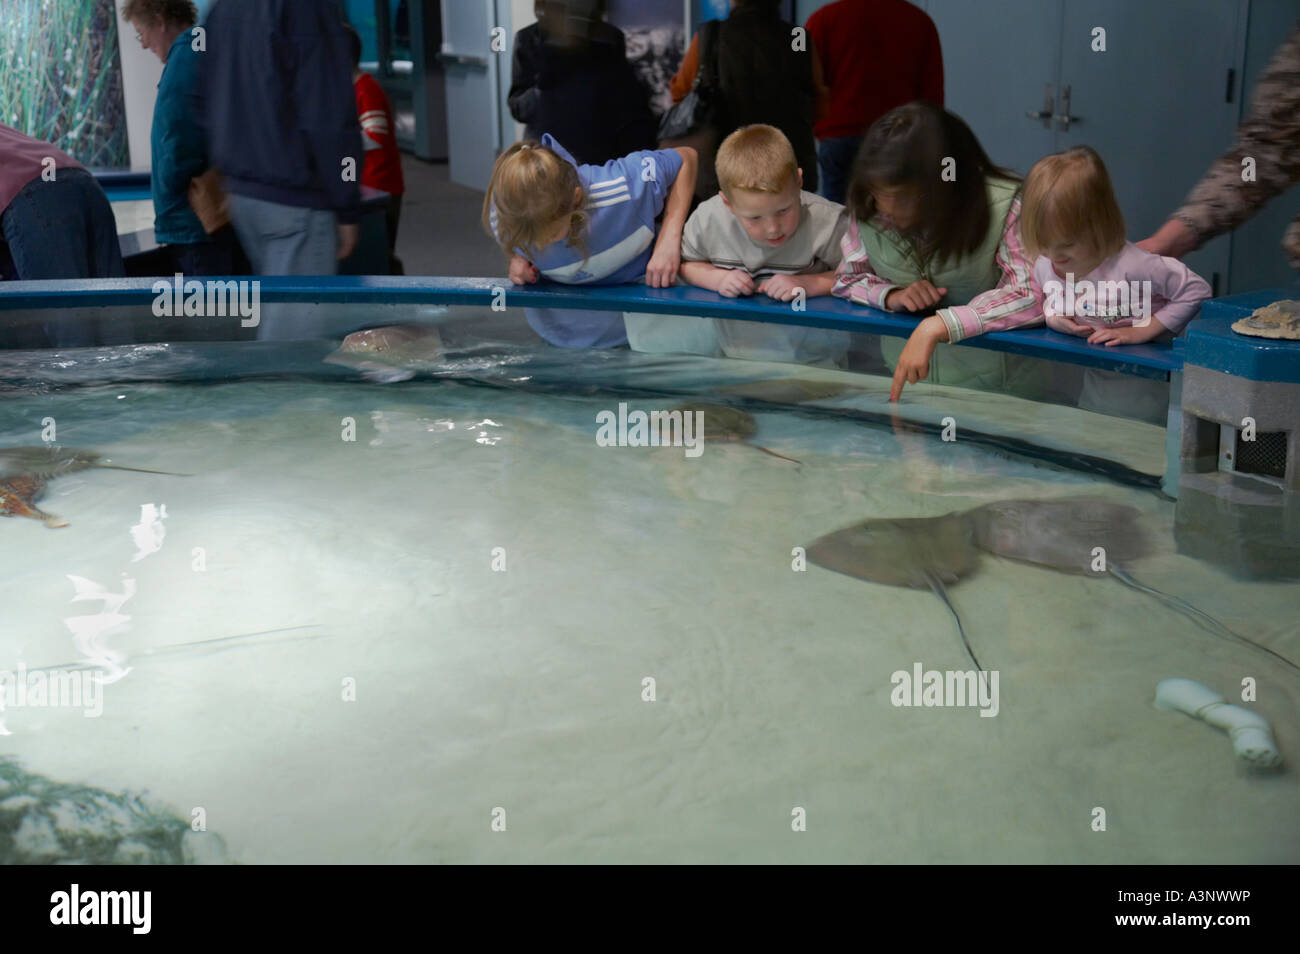 Roanoke Island  North Carolina Aquariums